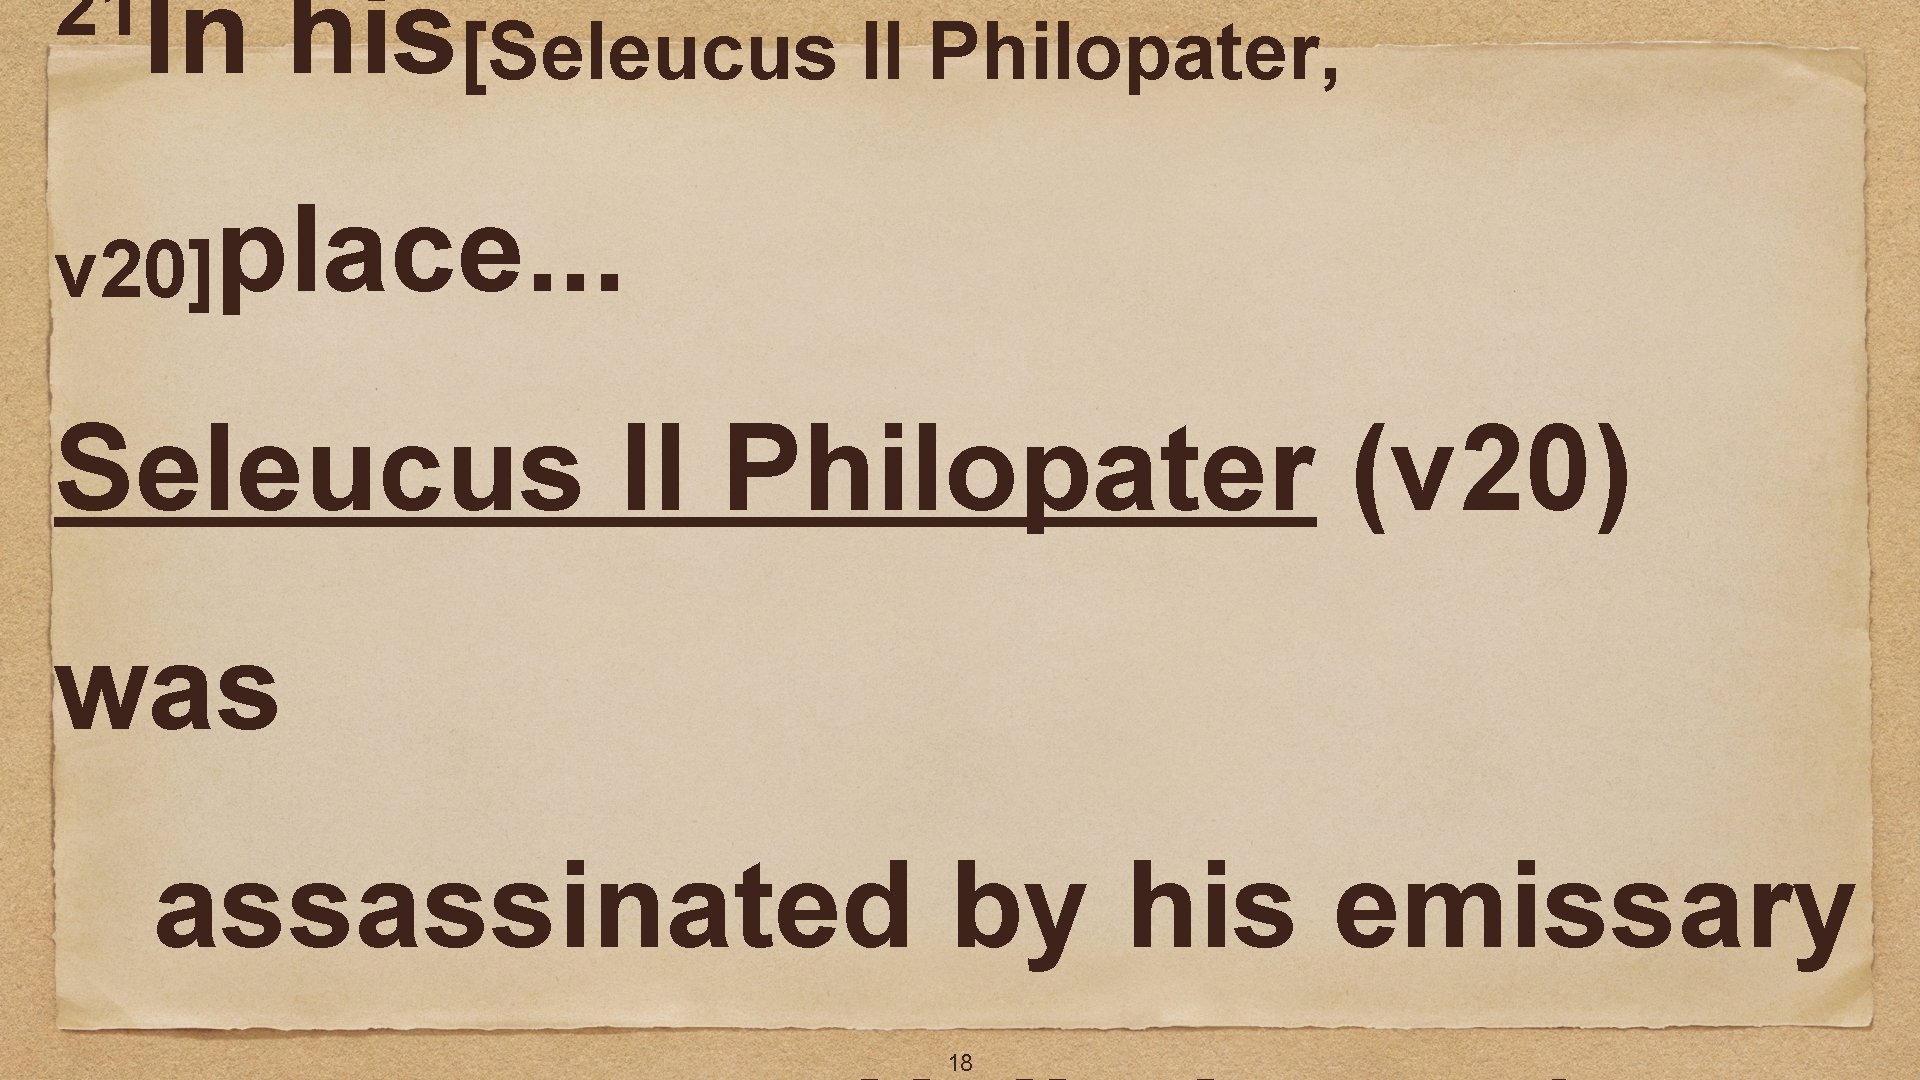 21 In his[Seleucus II Philopater, v 20]place. . . Seleucus II Philopater (v 20)